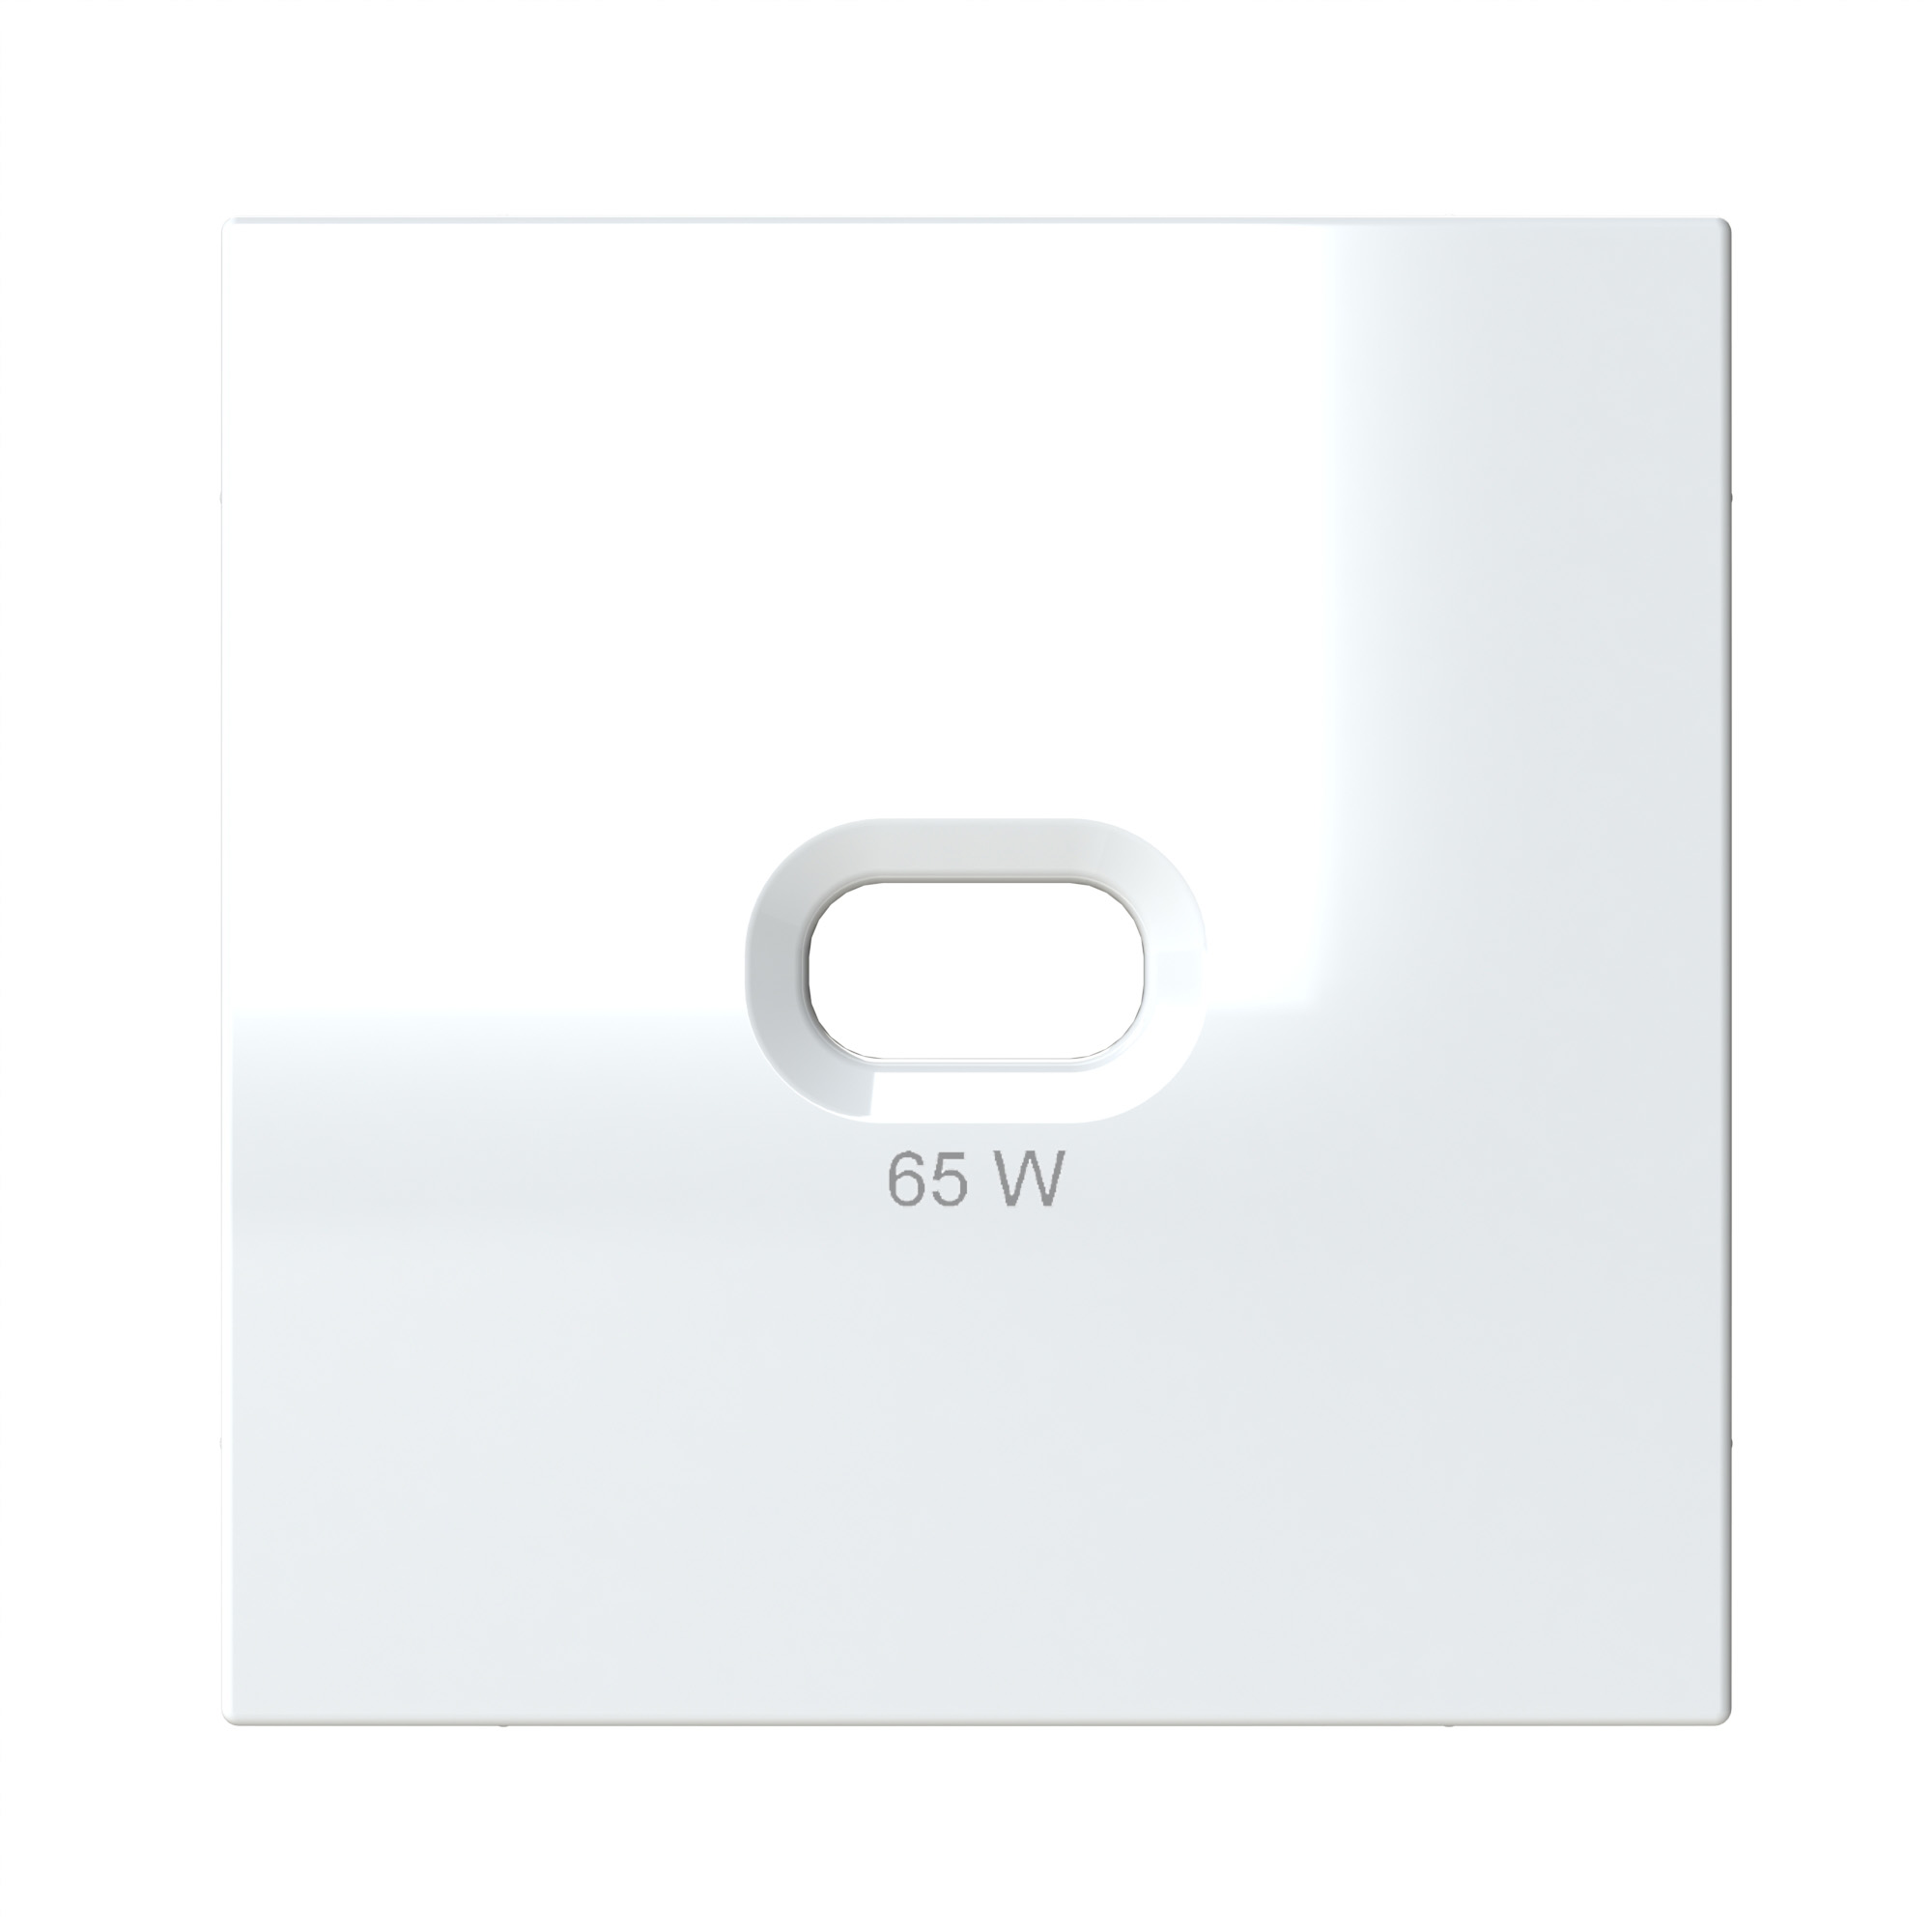 Abdeckplatte für USB-C Steckdose 65 W polarweiß-seidenglanz OPUS 55